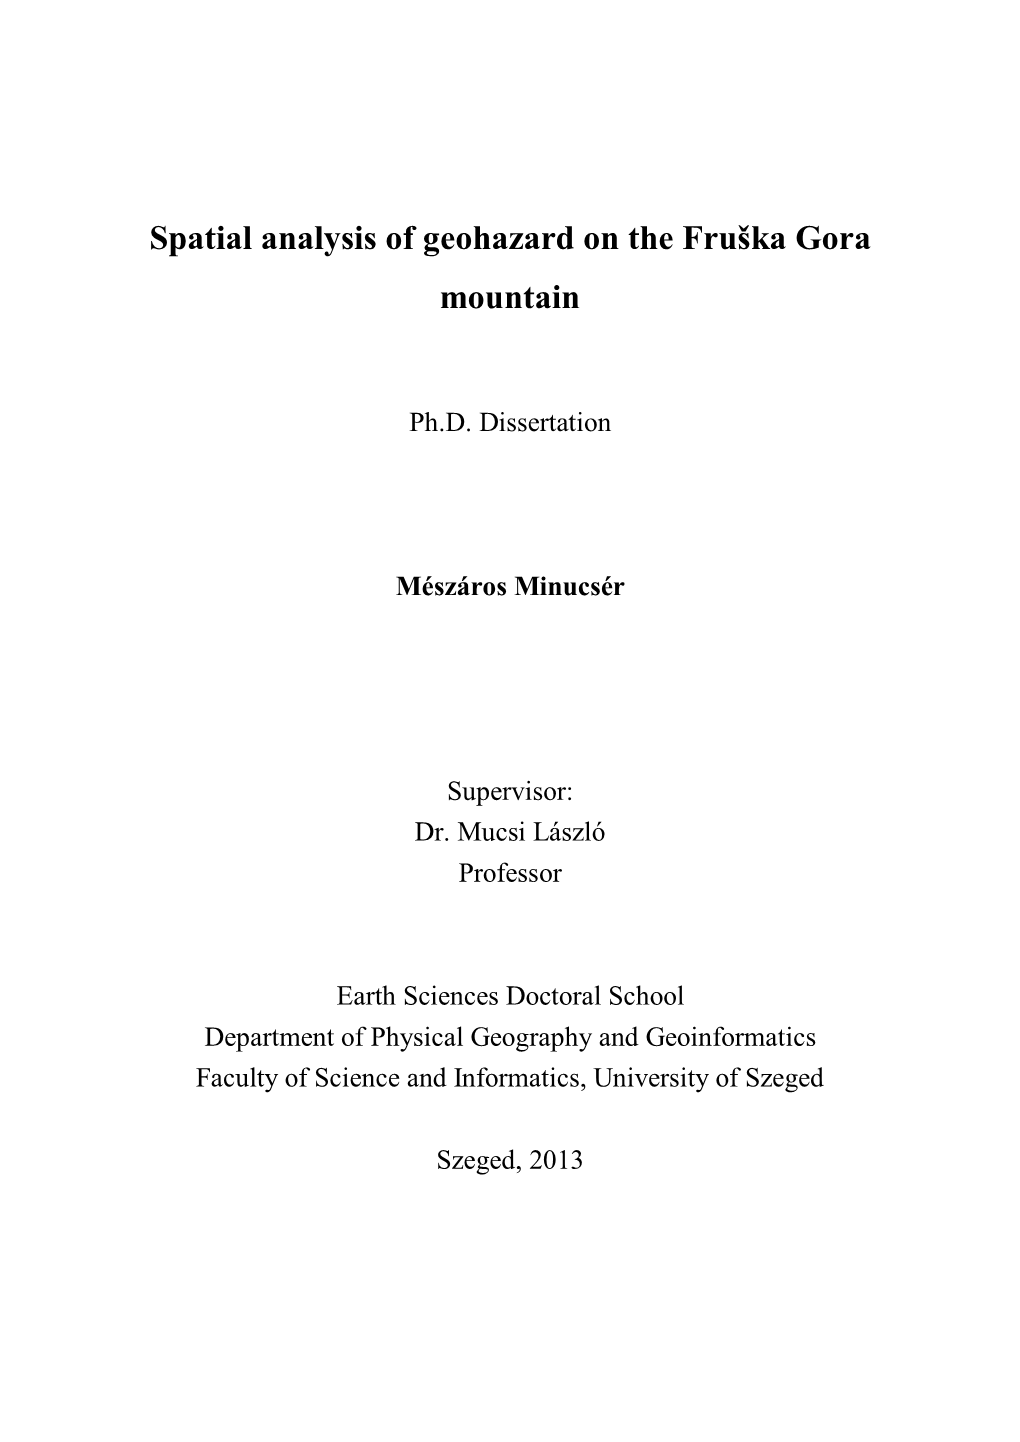 Spatial Analysis of Geohazard on the Fruška Gora Mountain